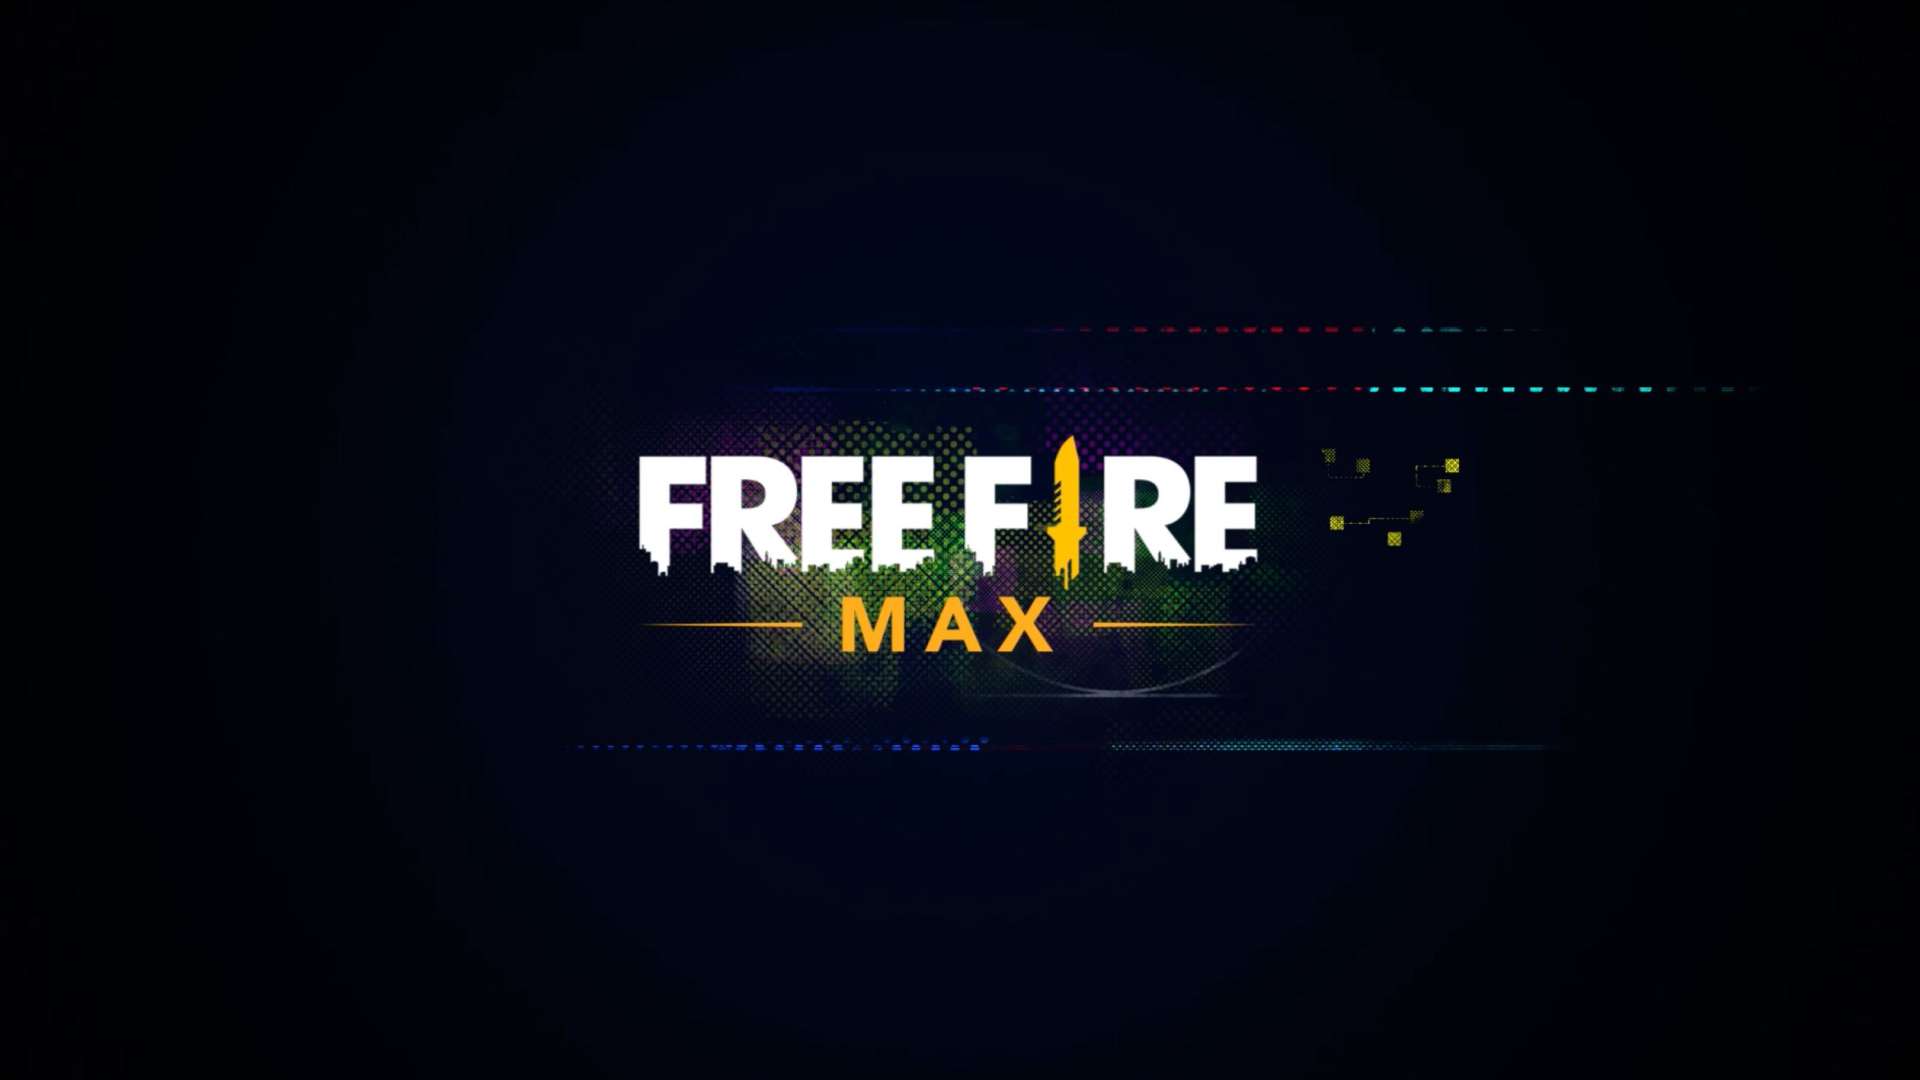 FreeFire MAX 2020